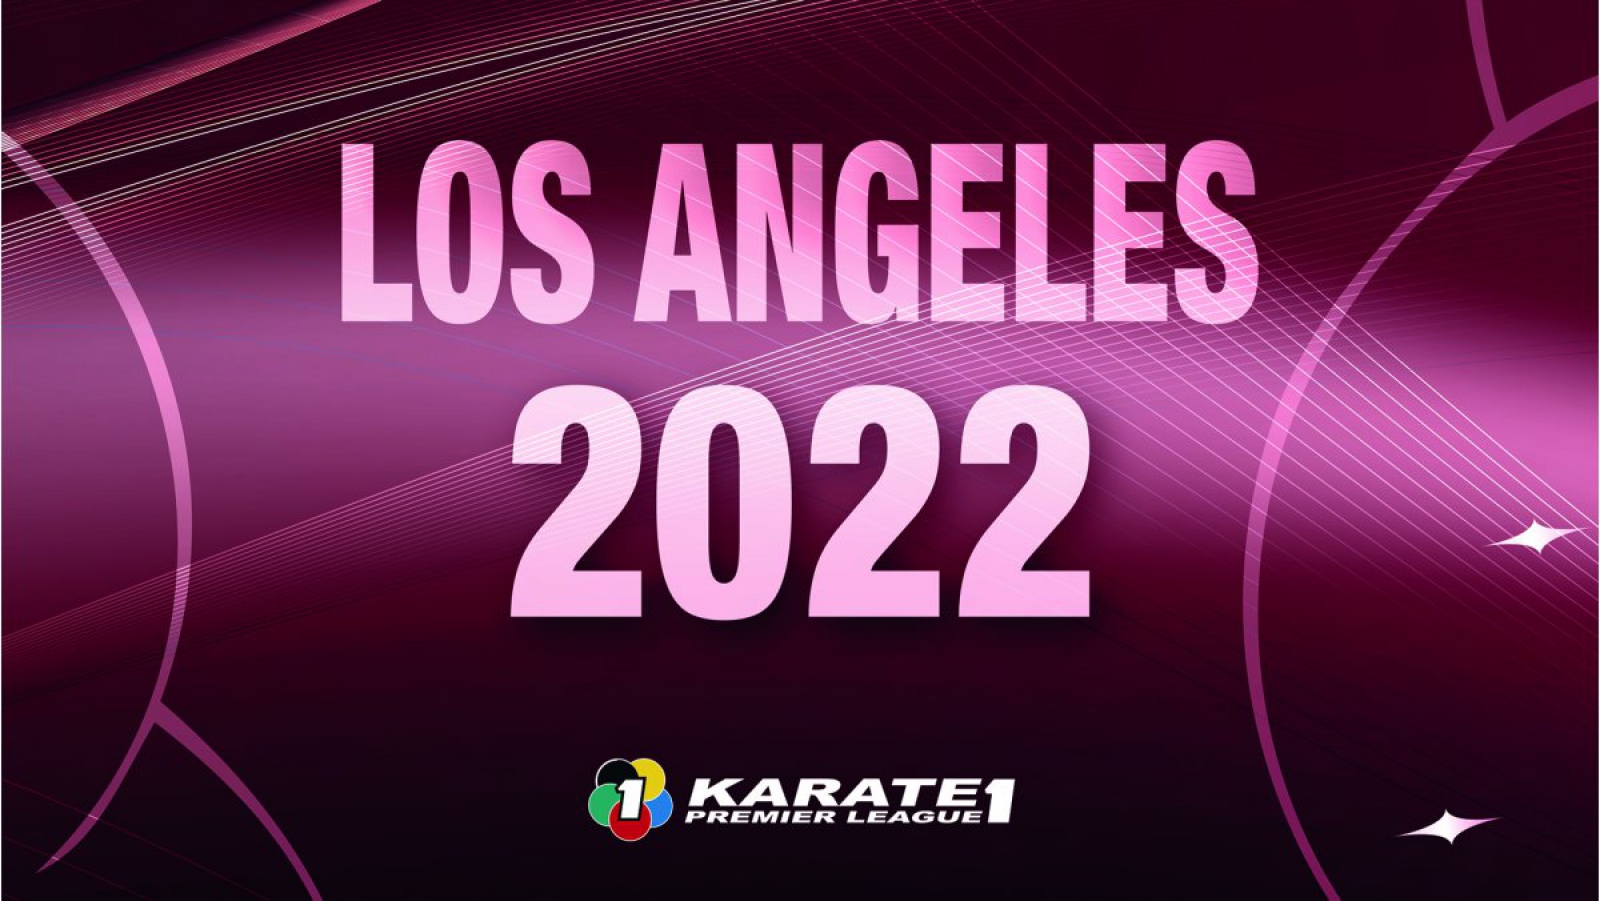 Karate1 Online Registration Karate1 Premier League - Los Angeles 2022